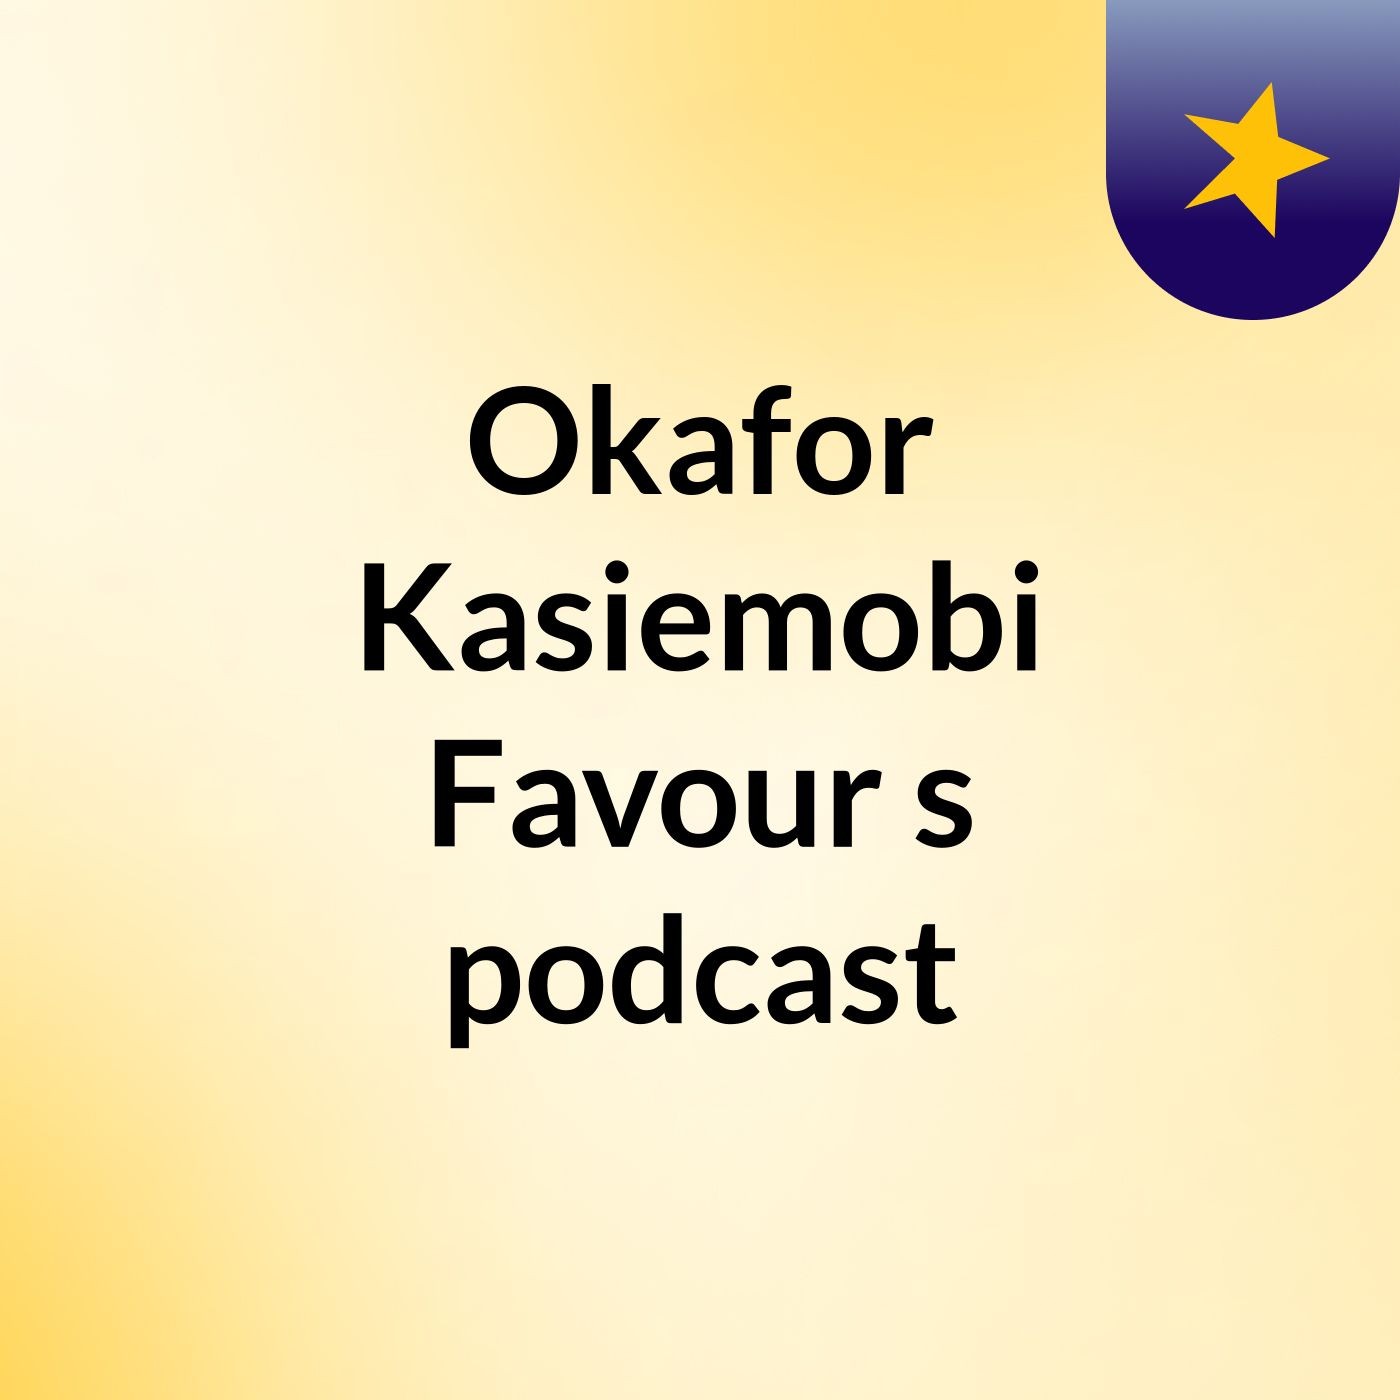 Okafor Kasiemobi Favour's podcast